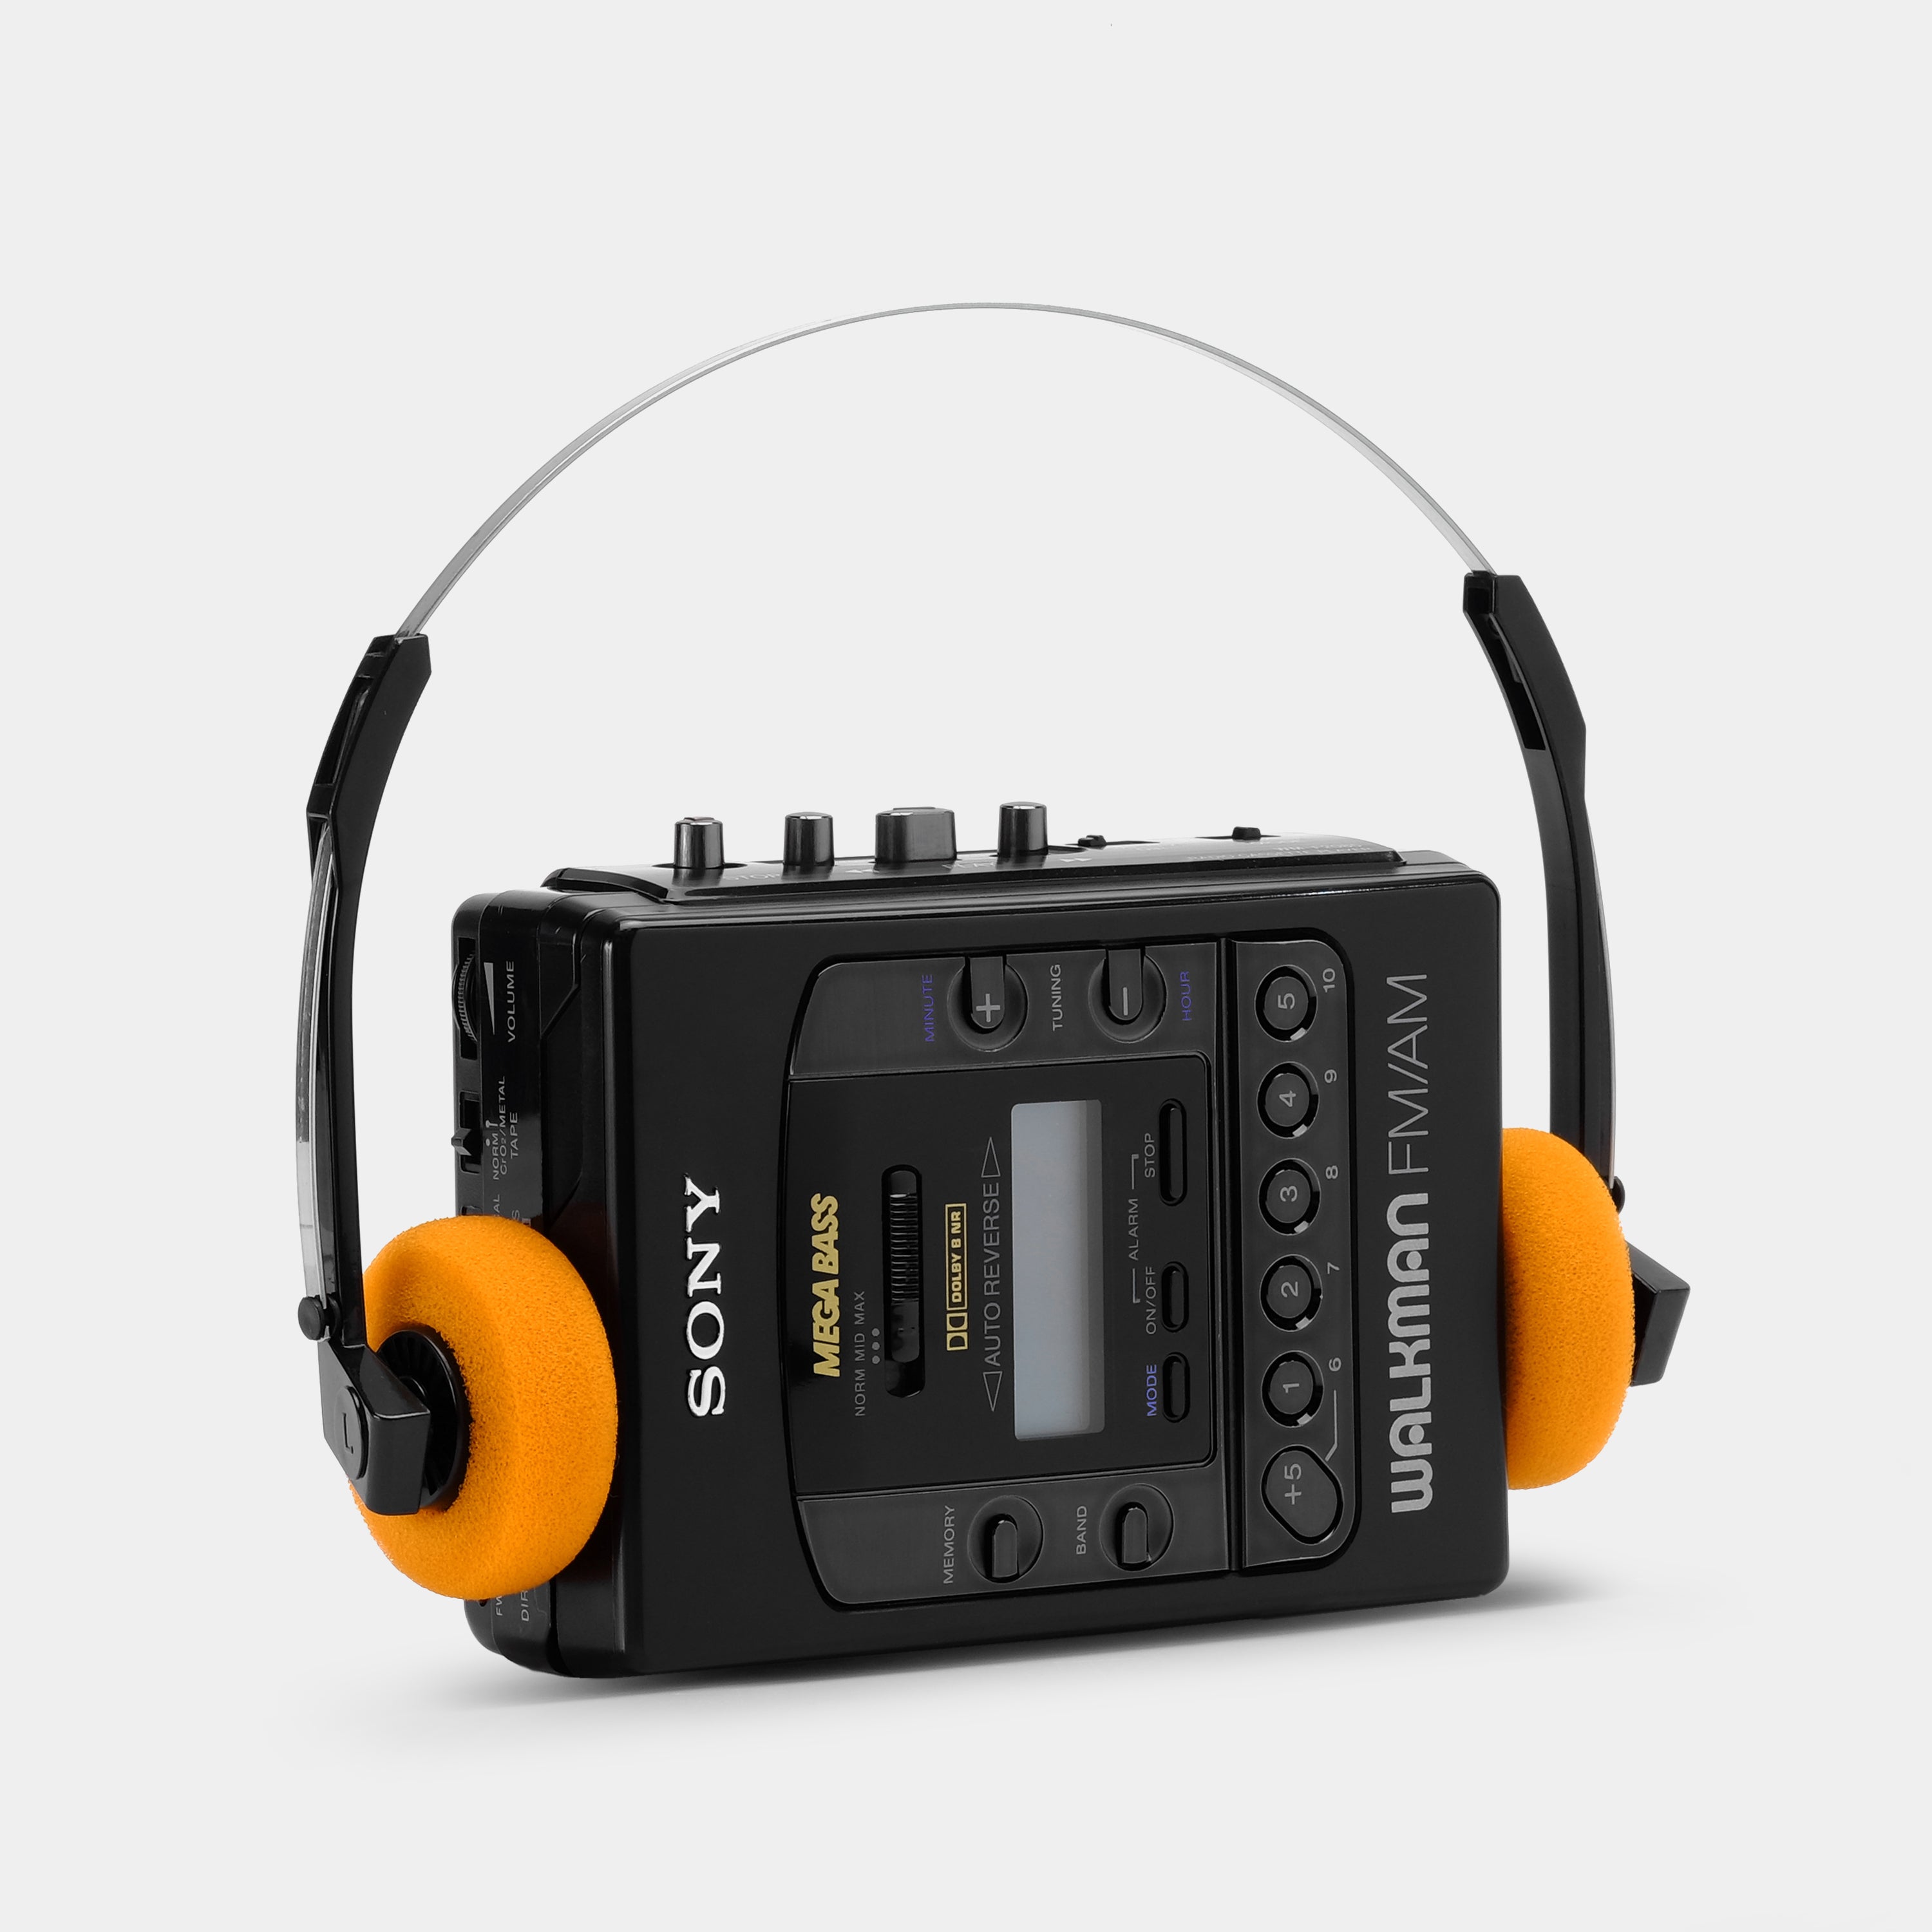 Sony Walkman WM-F2085 Auto Reverse Portable Cassette Player